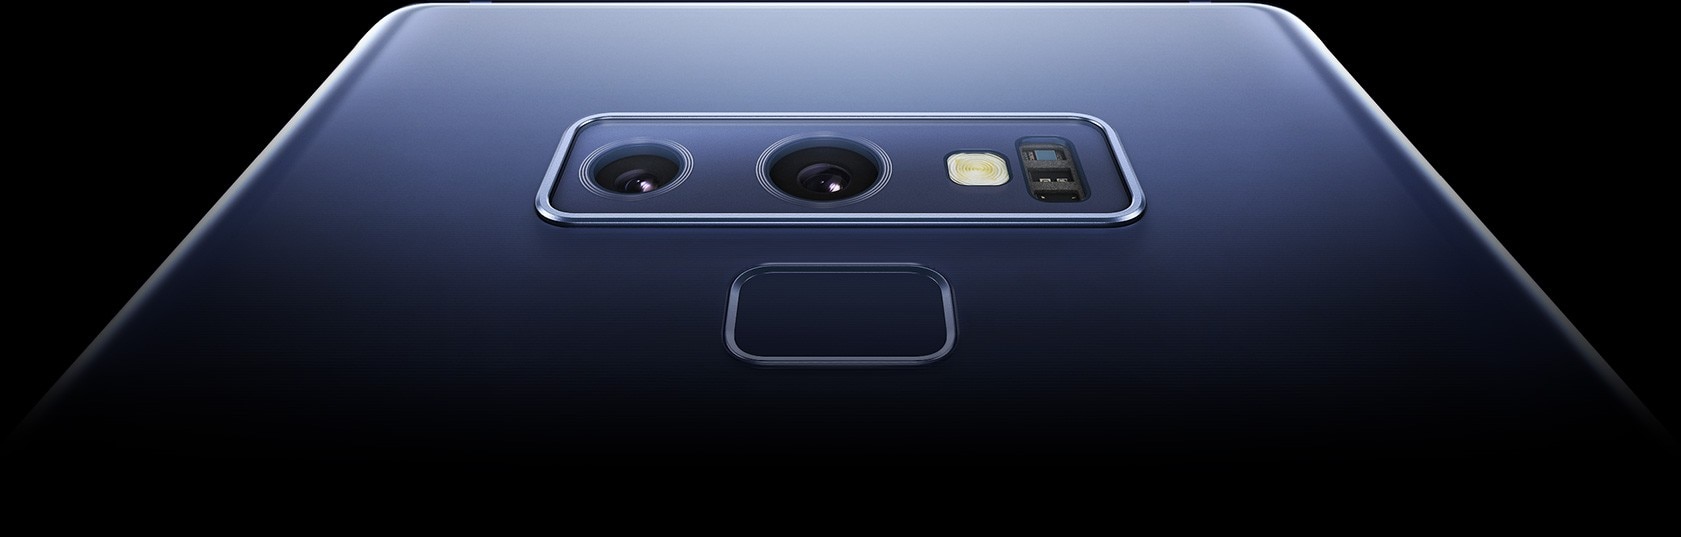 Veliki krupni plan dvostrukog objektiva glavne kamere i skenera otiska prsta uređaja Galaxy Note9